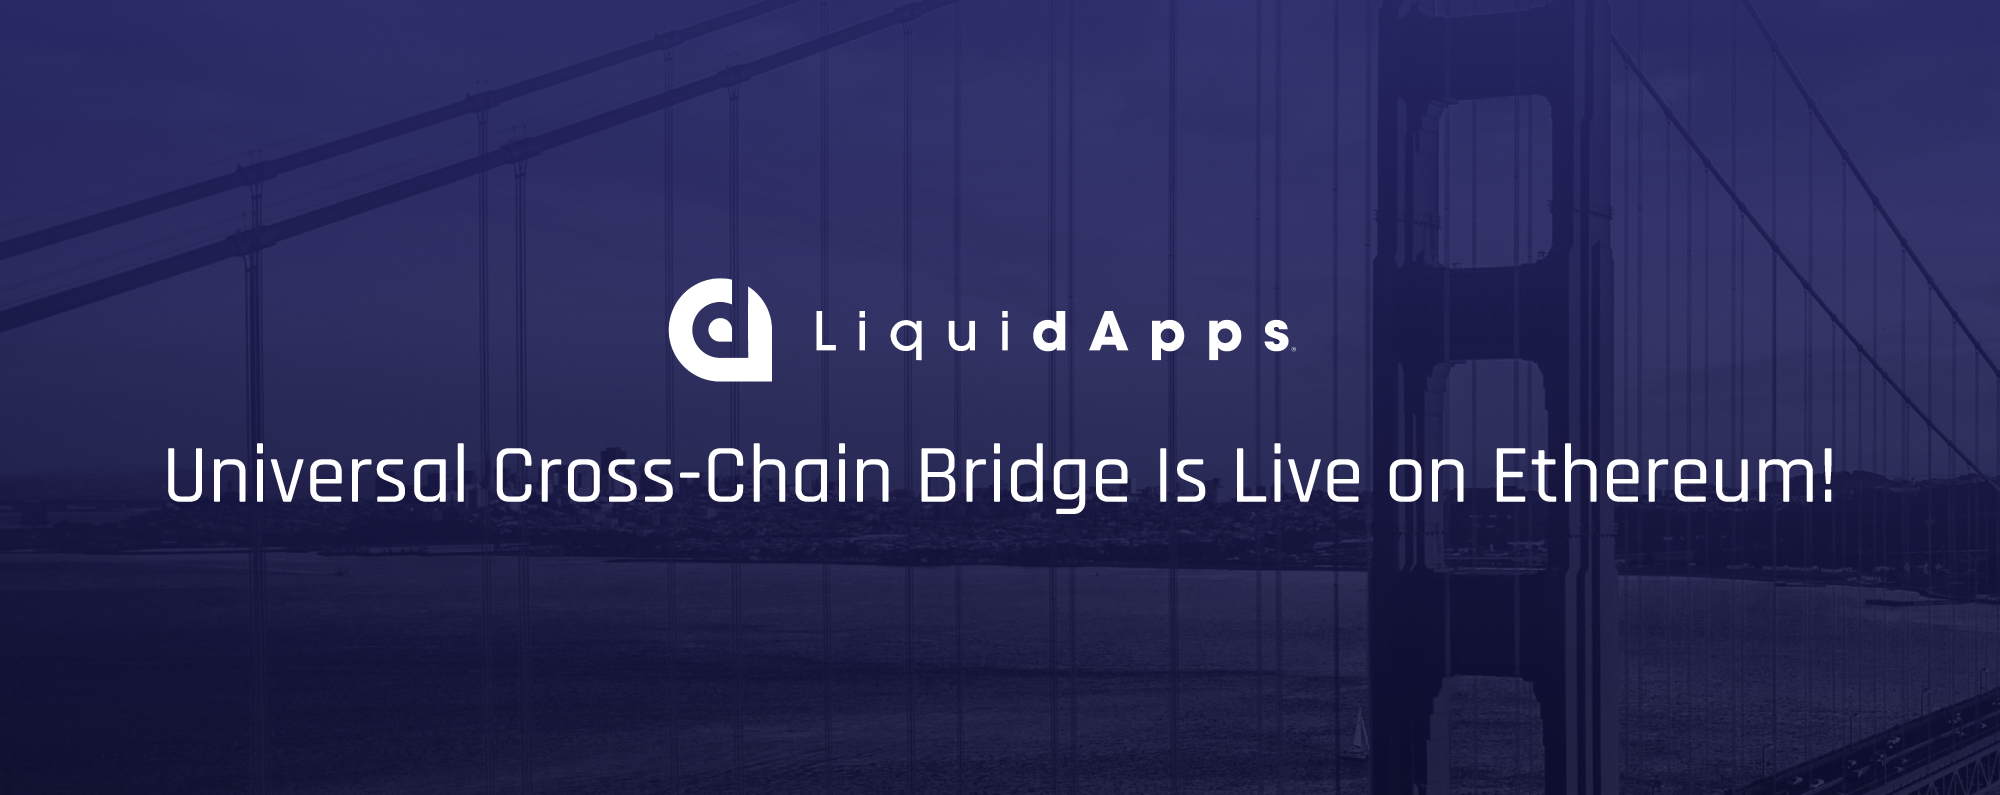 LiquidApps launched the Cross-Chain Bridge on Ethereum